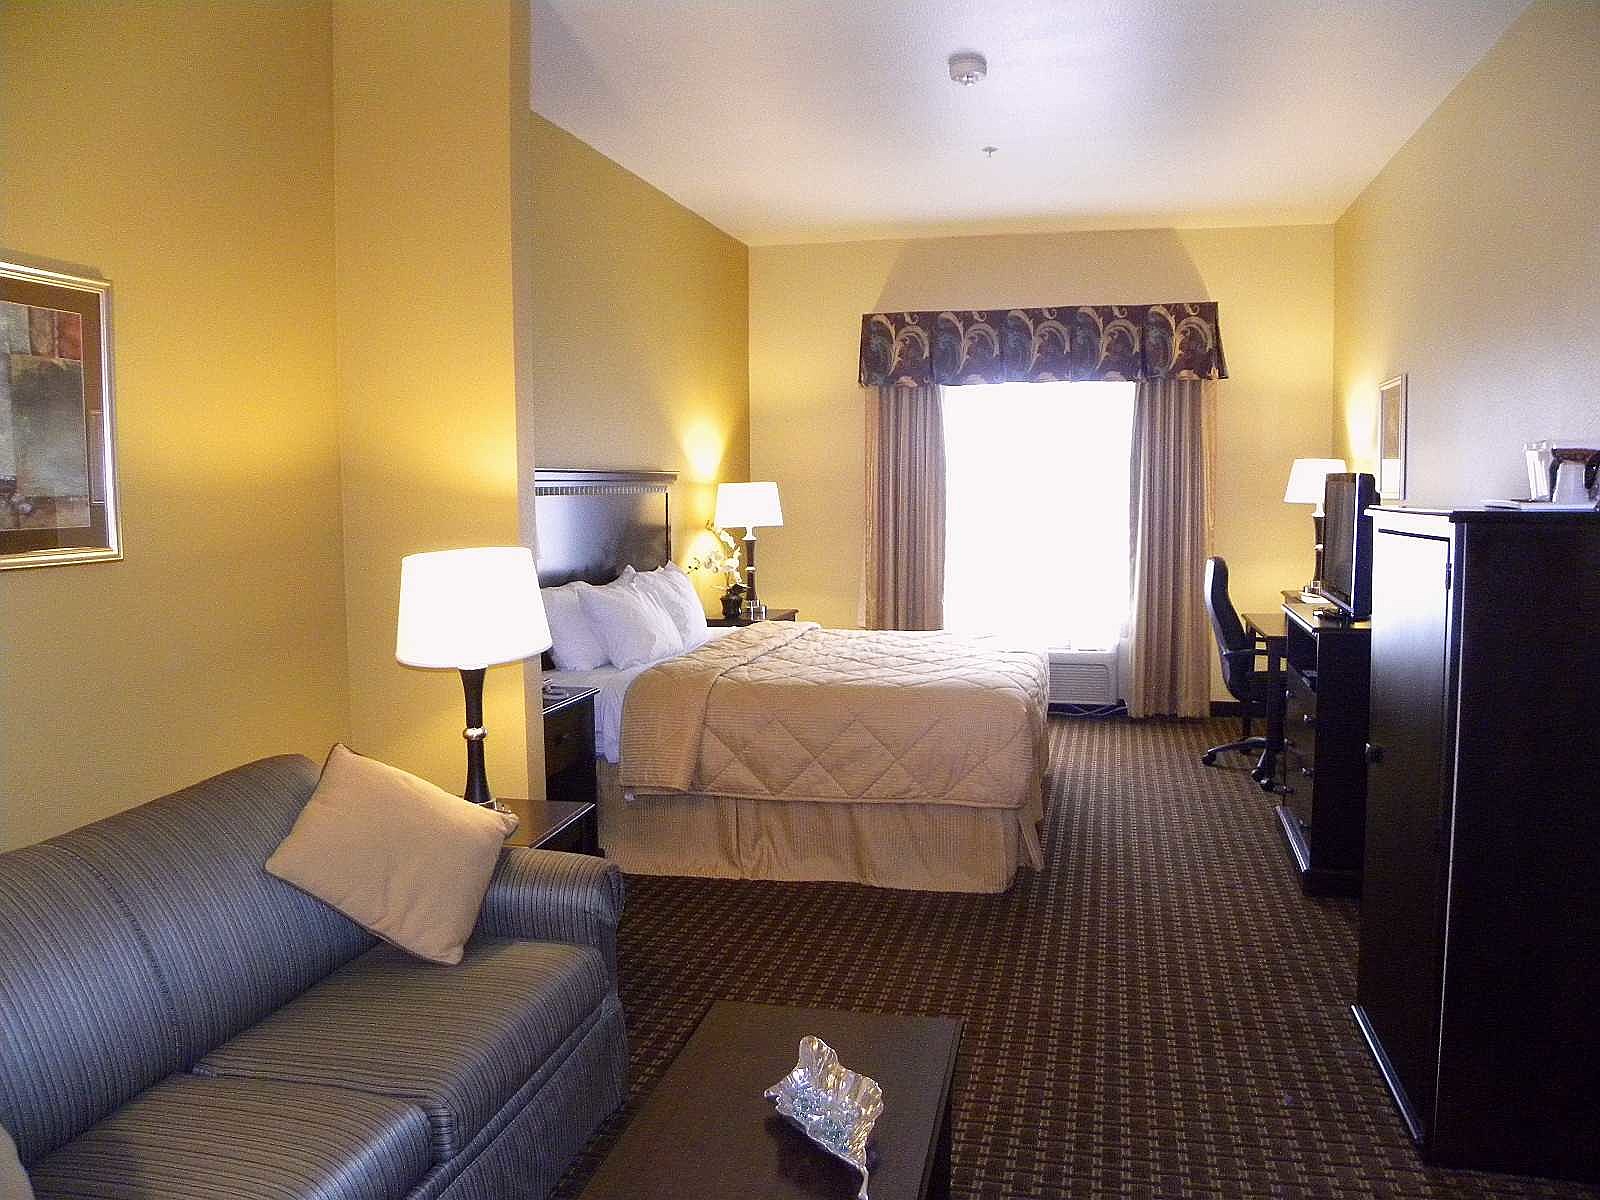 Comfort Inn Suites King size bed room